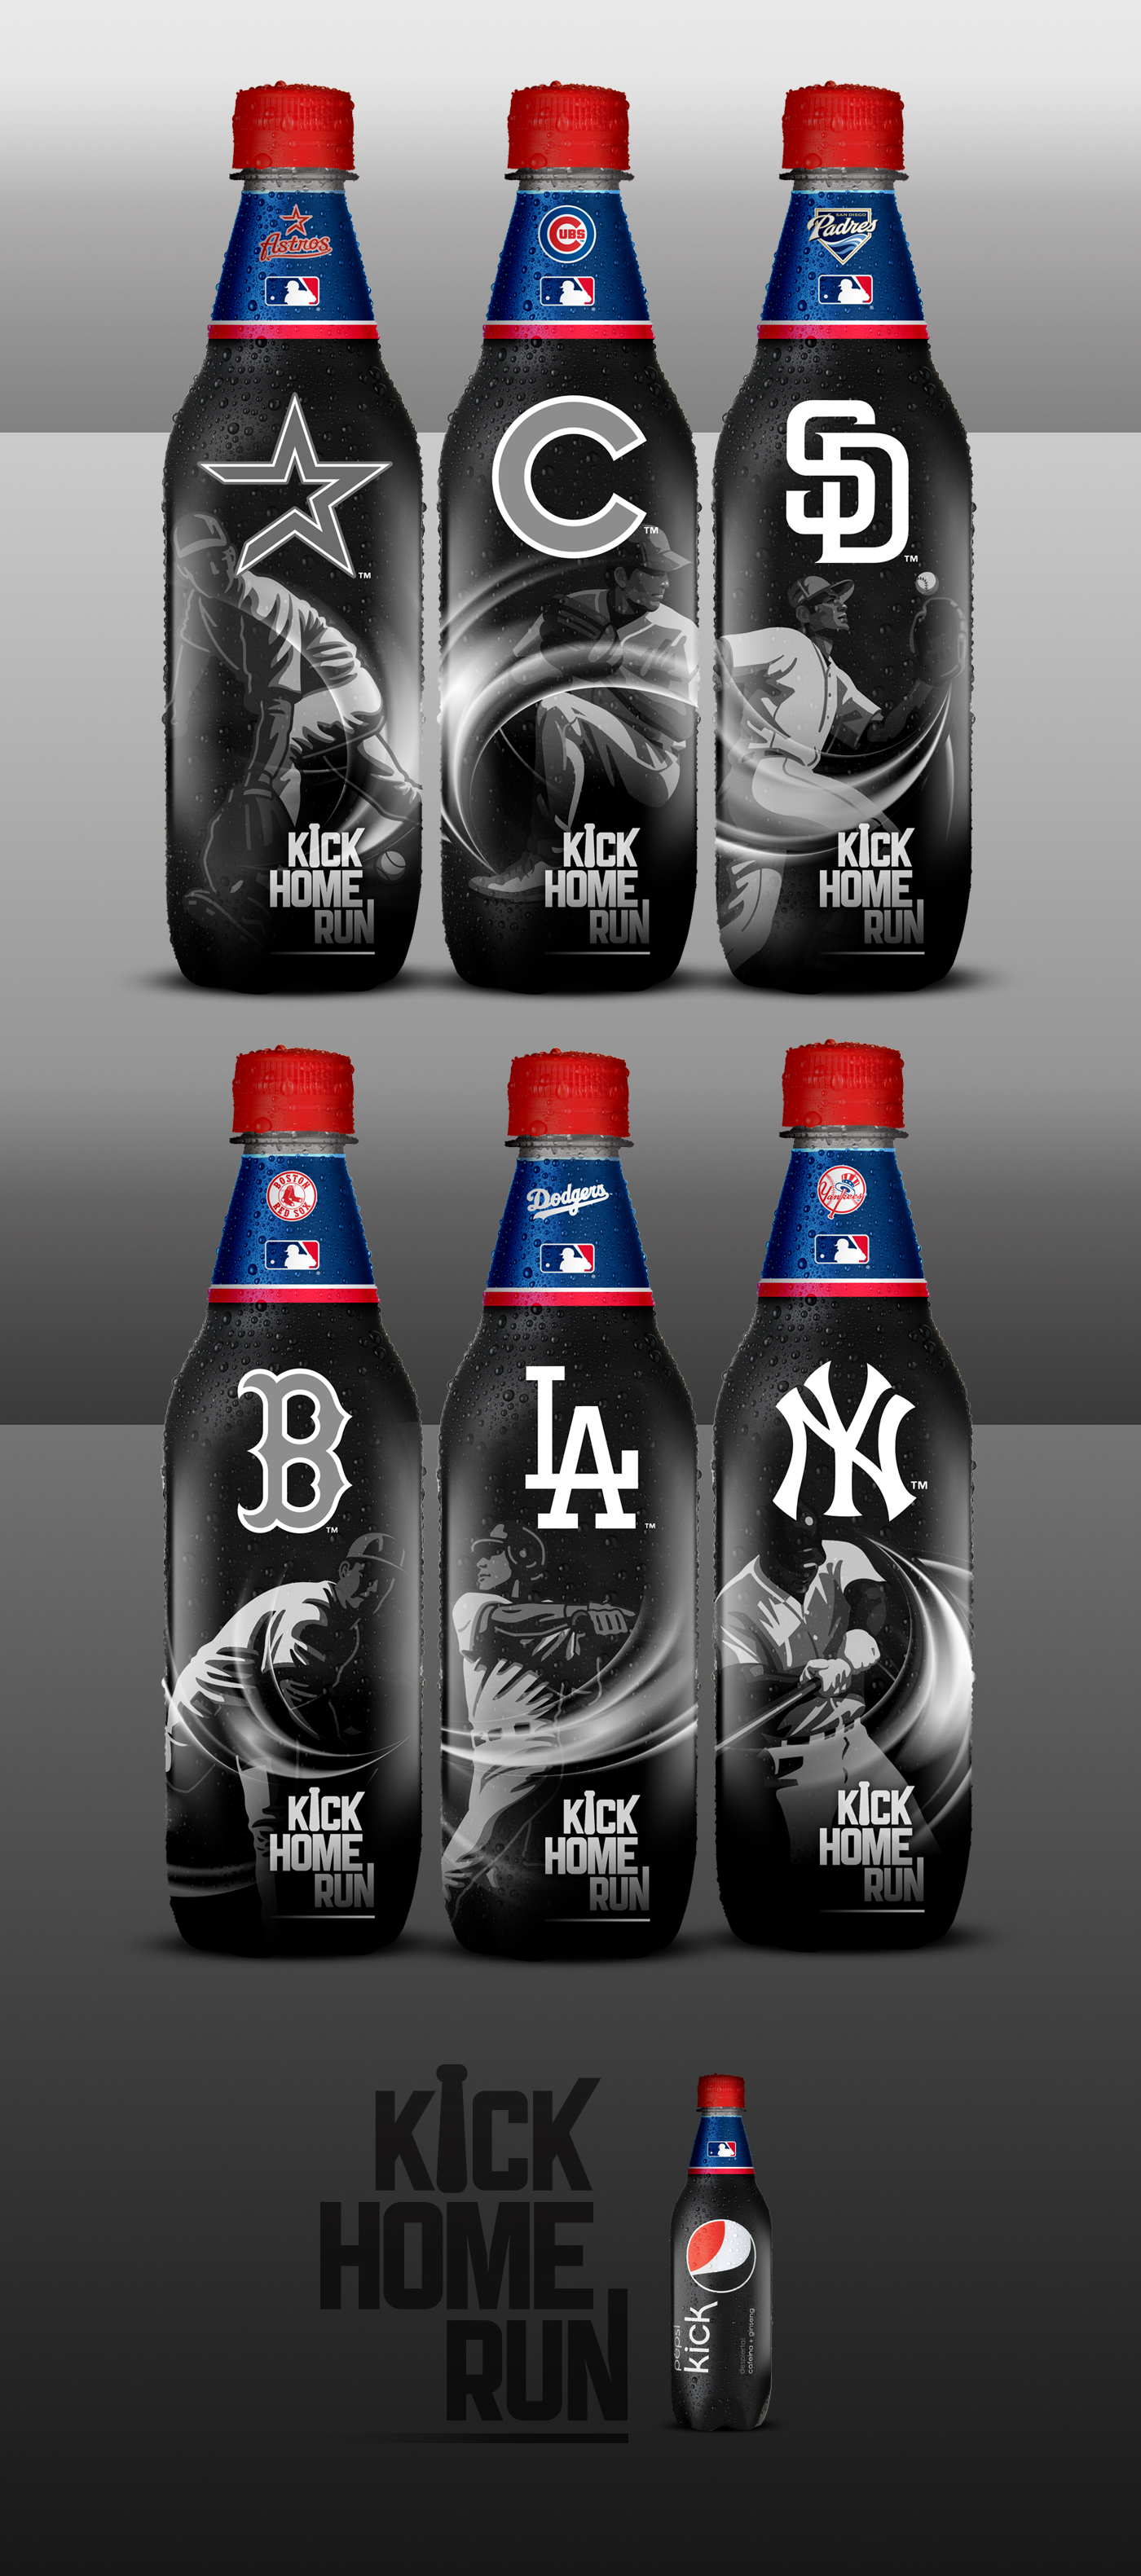 pepsi kick packaging bottle Label bottle soda mlb pepsi Players Dark Label Ilustrativo family brand collect Collection base ball